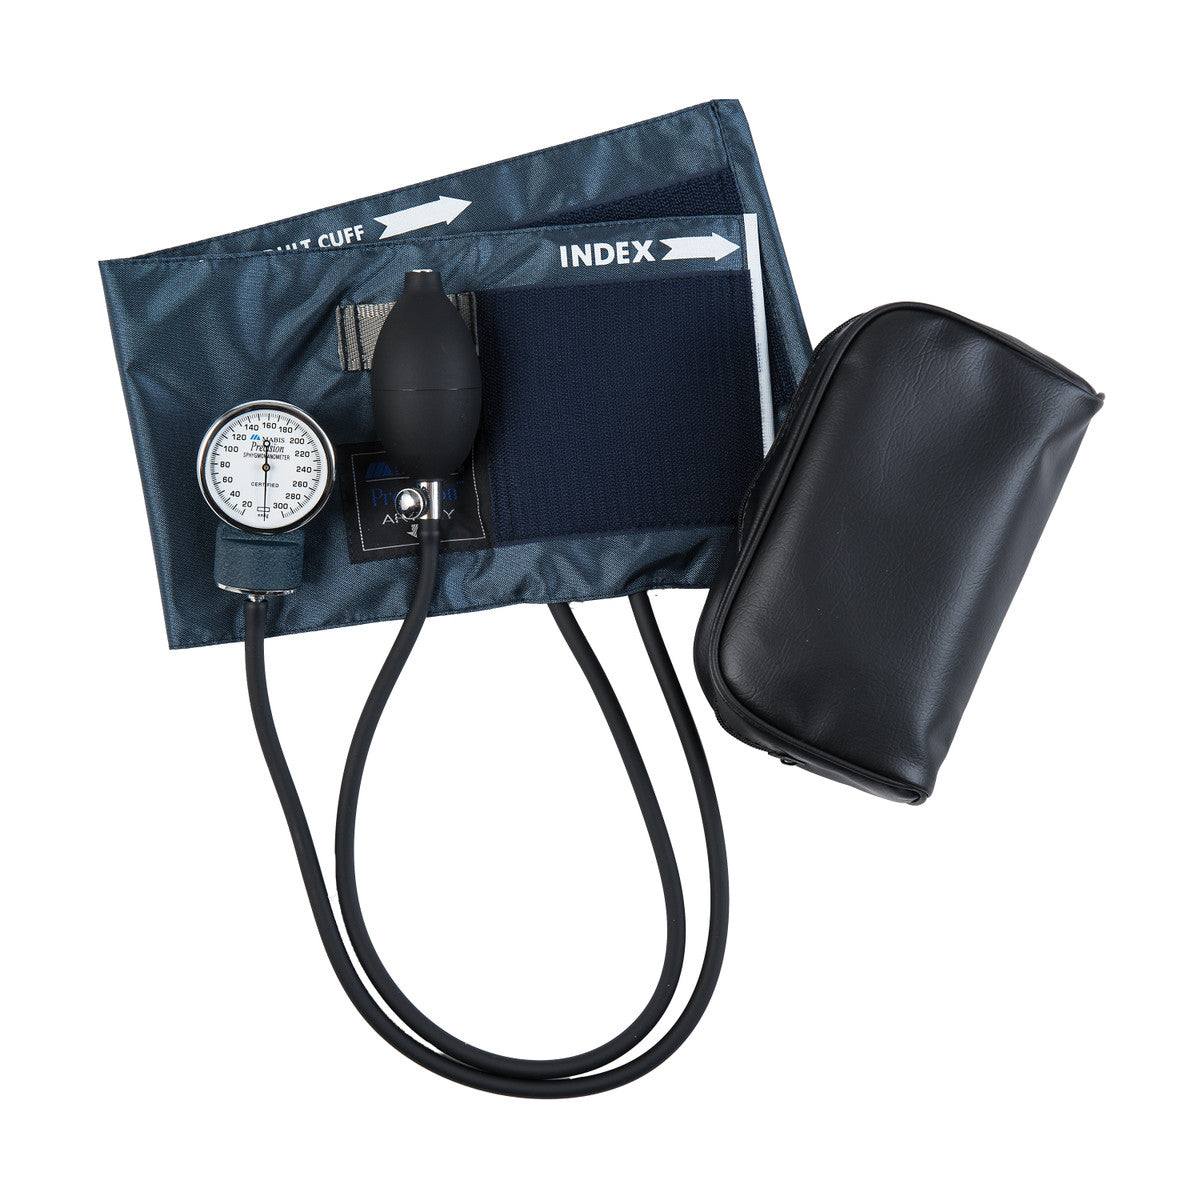 Professional Blood Pressure Monitor Supplies